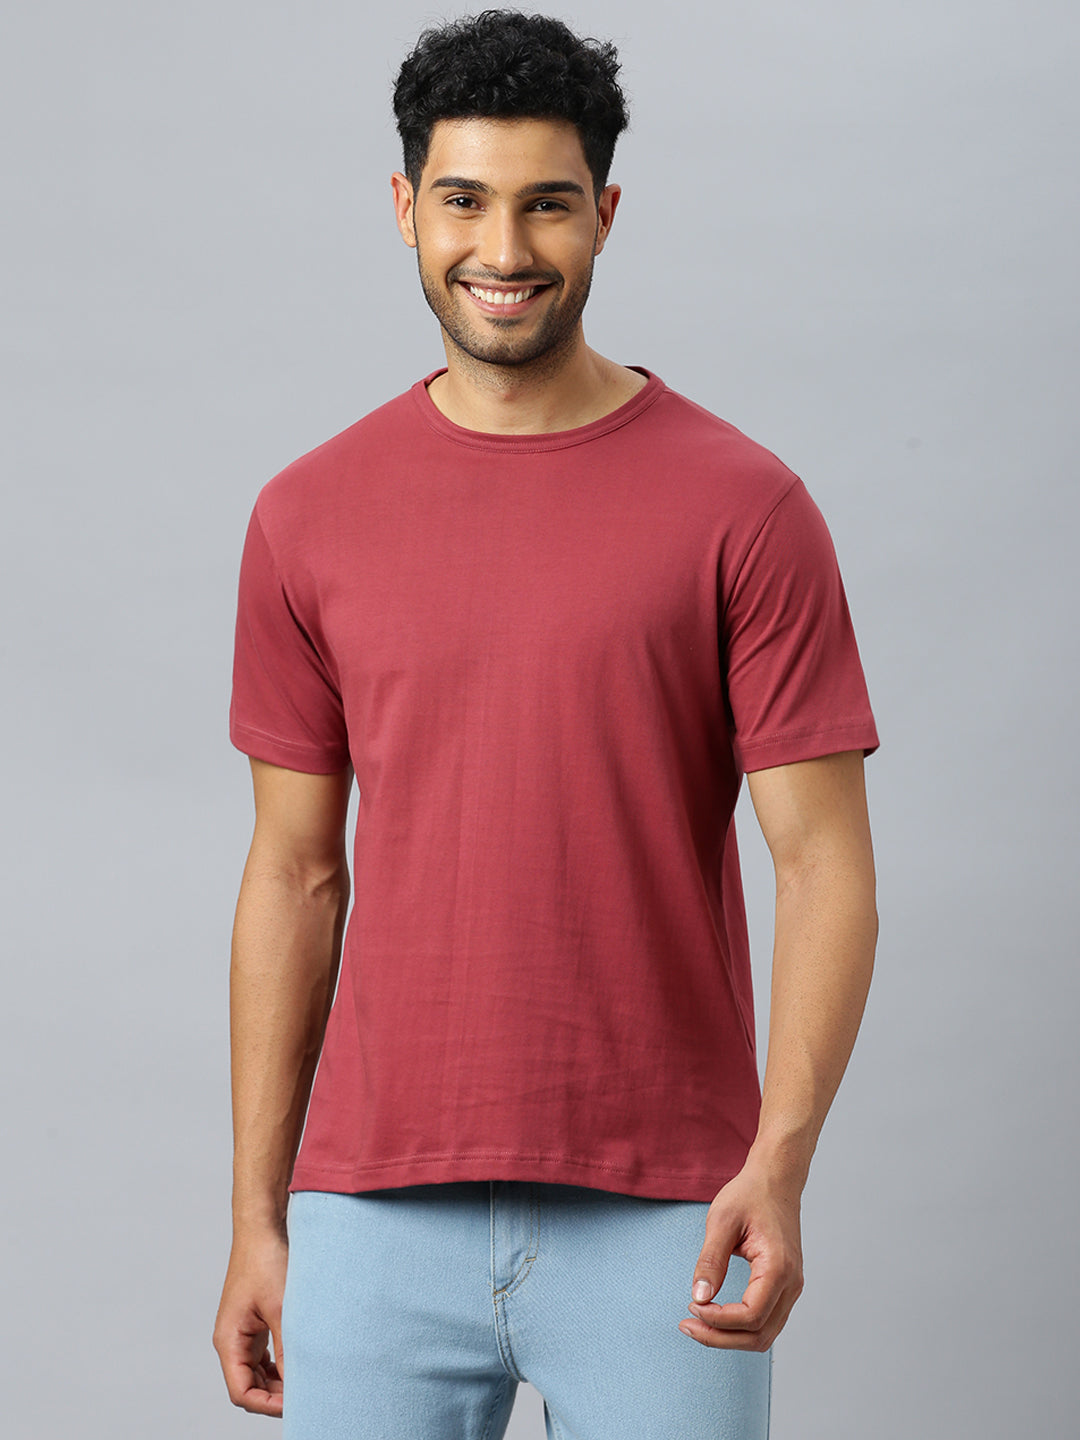 Don Vino Men's Garnet Red Solid Crew Neck T-Shirt